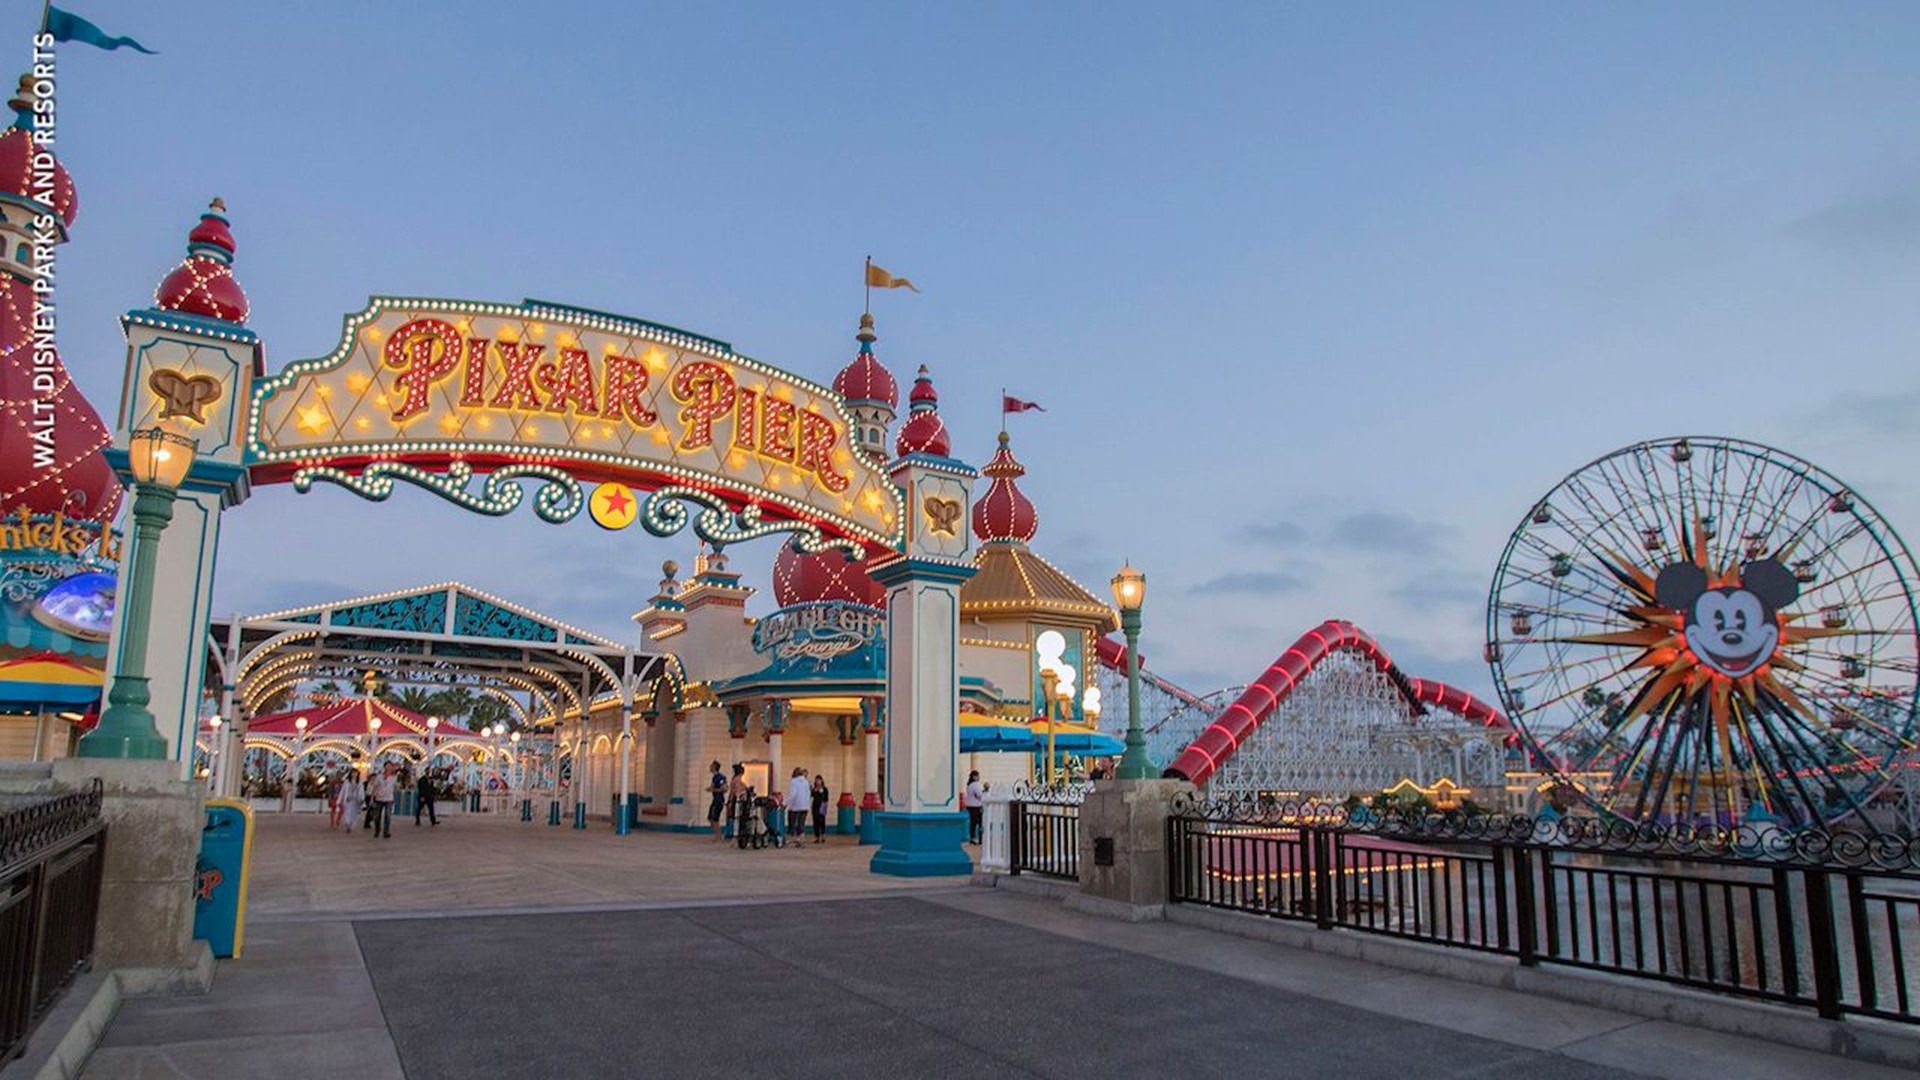 Disneyland S New Pixar Pier Is It Incredible King5 Com - boardwalk tycoon 1 beach king roblox boardwalk tycoon